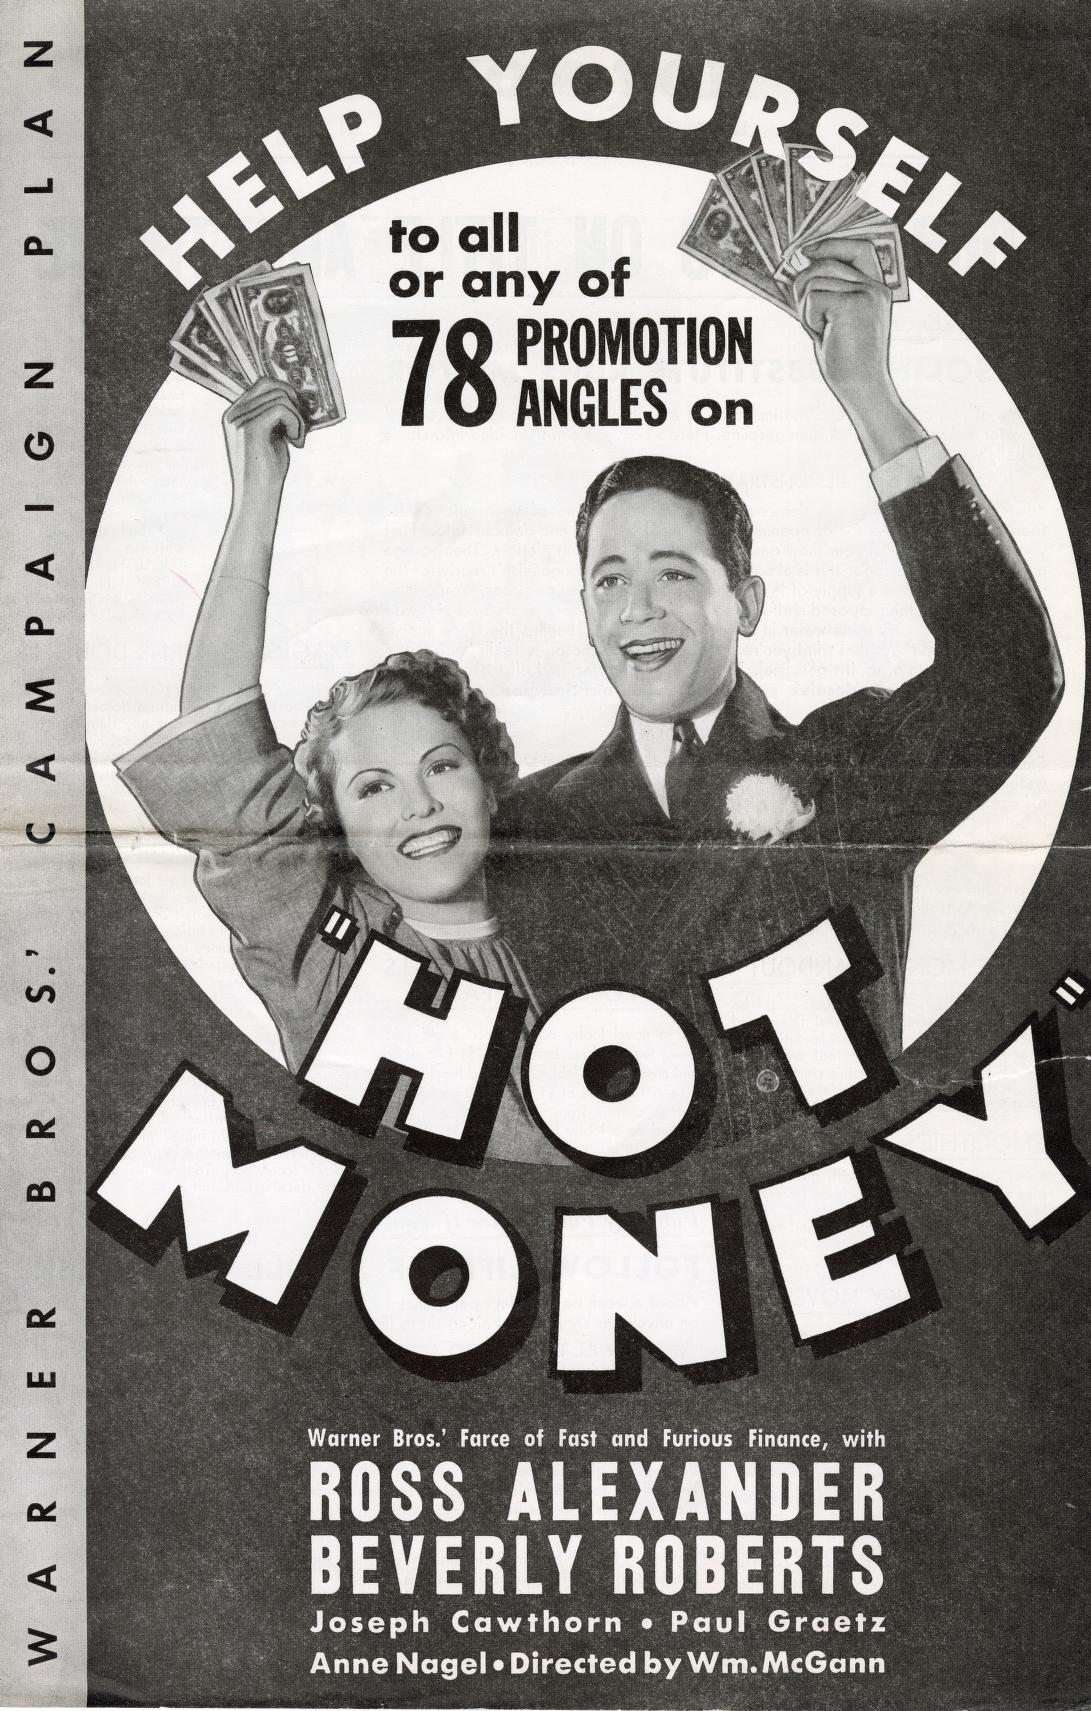 Hot Money (Warner Bros.)